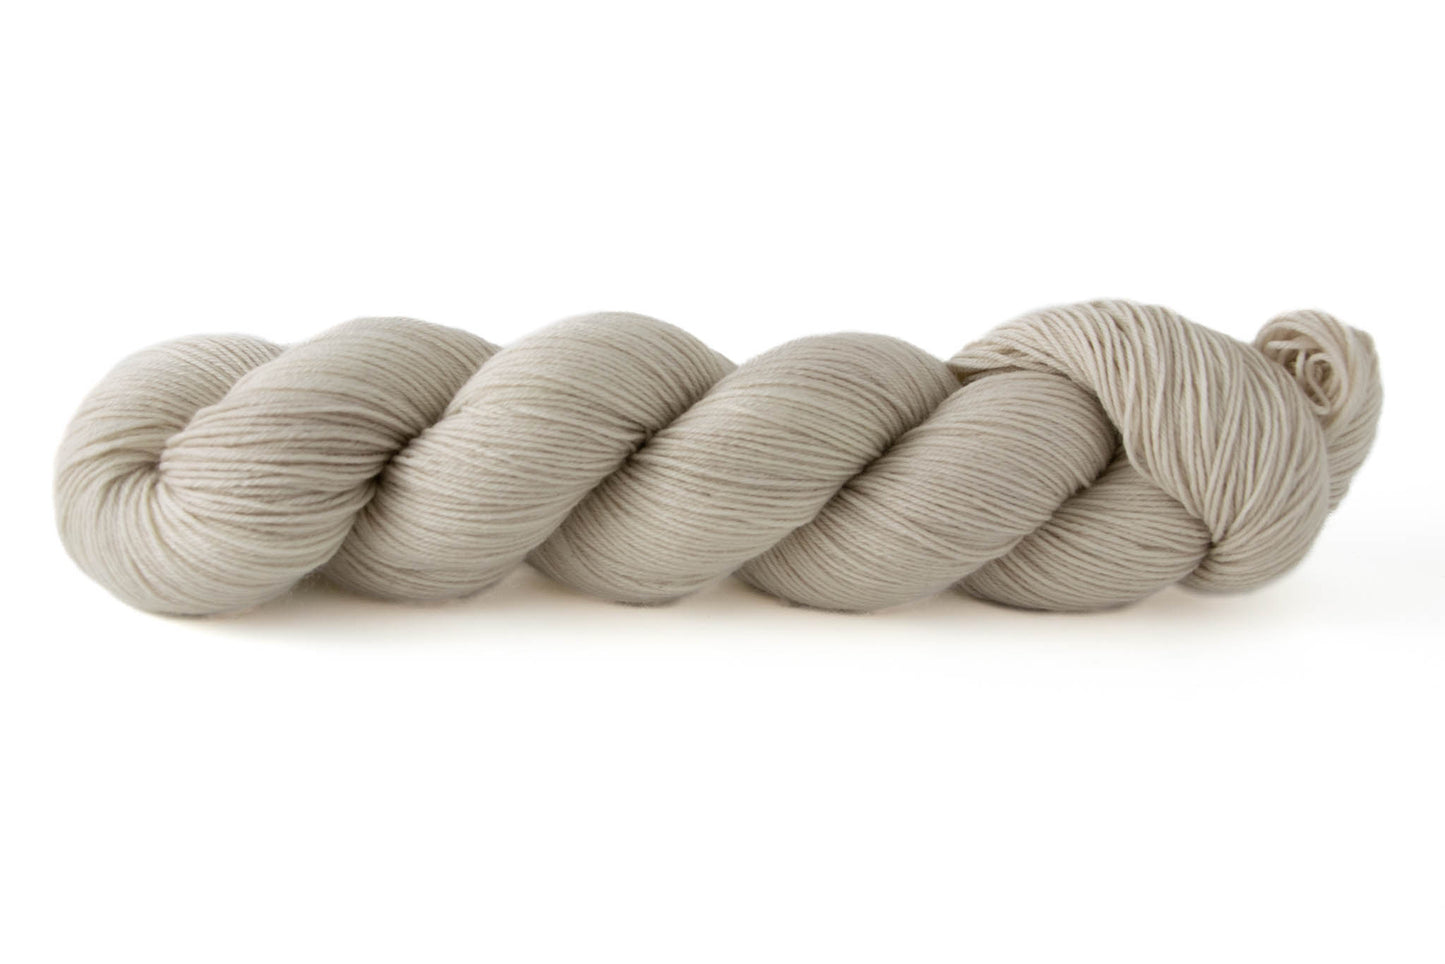 A bone white, cream skein of hand-dyed wool yarn.